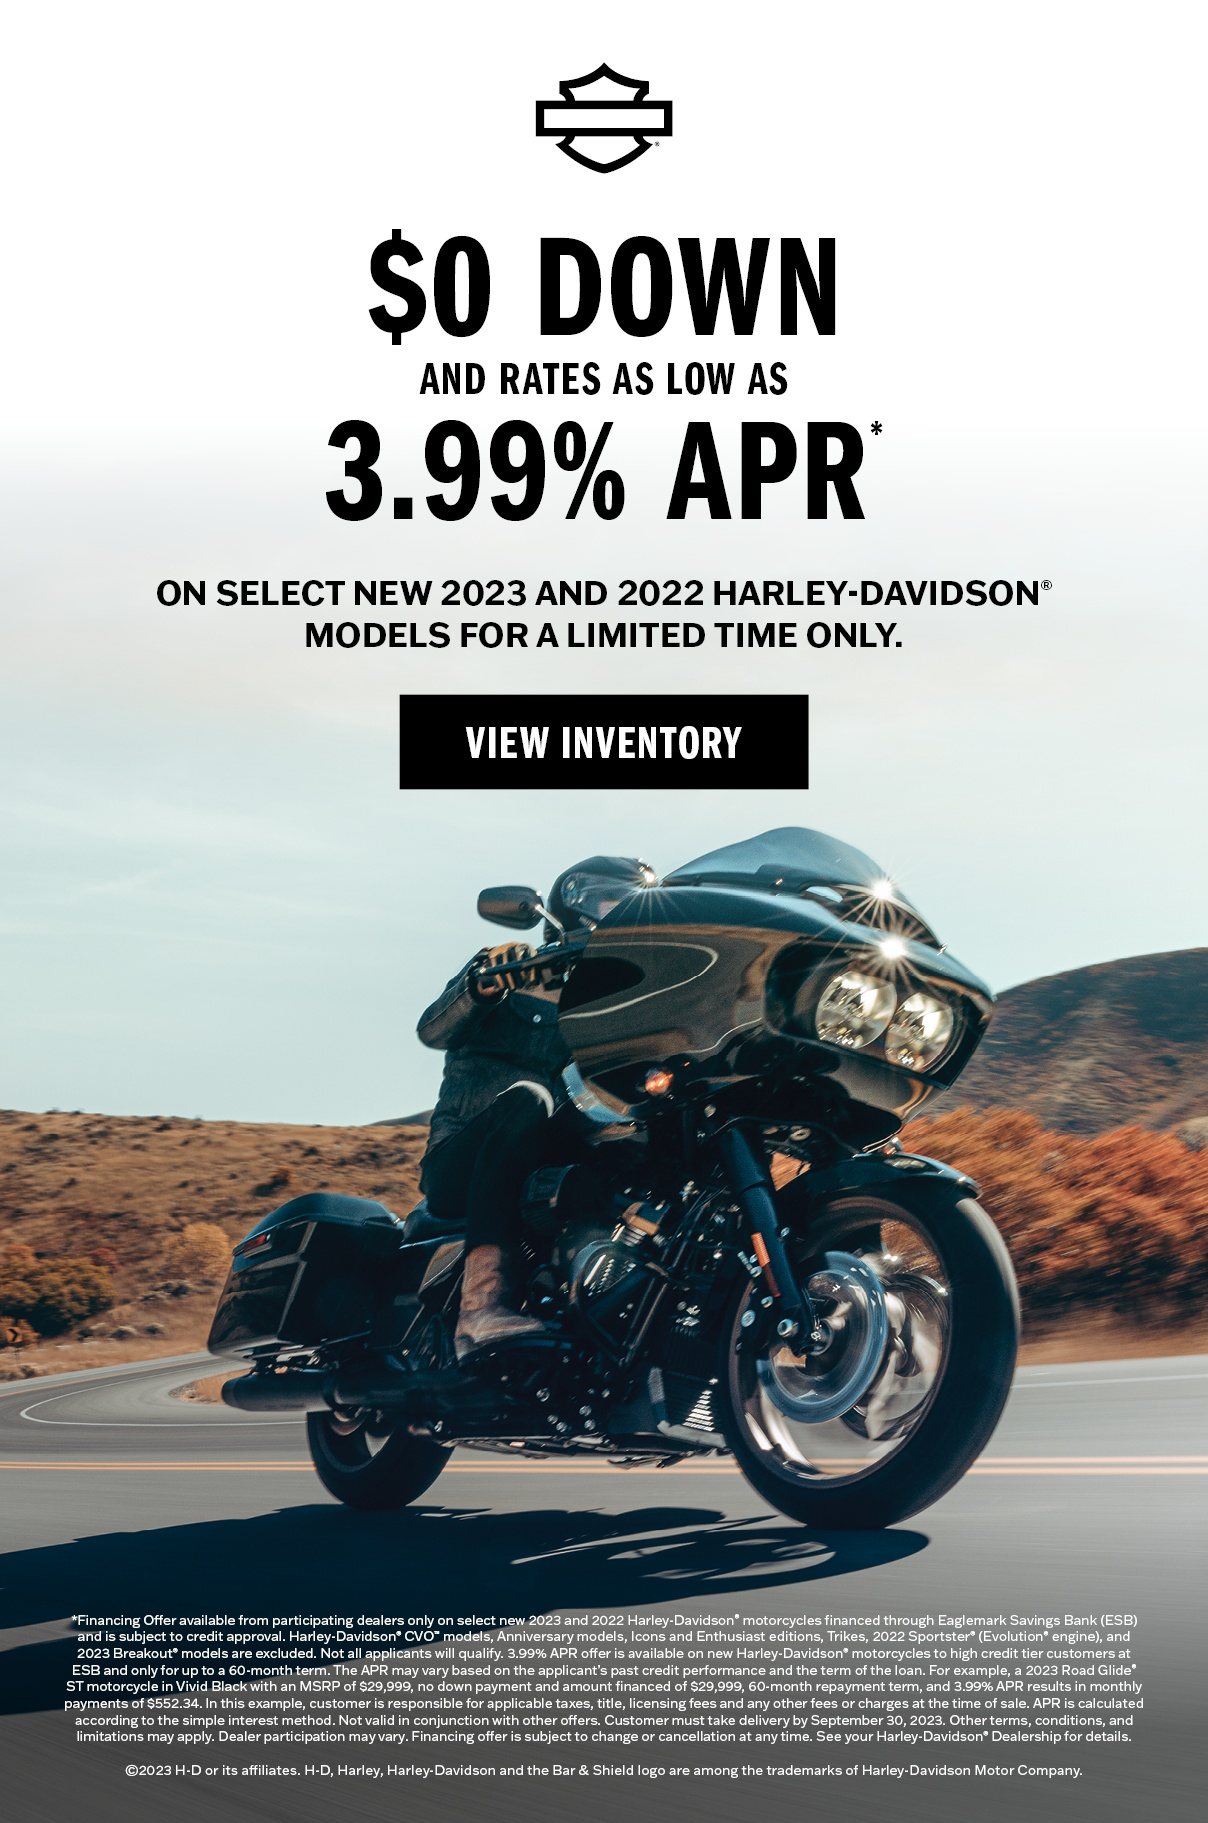 Rates as low as 3.99% on select new motorcycles at Faribault Harley-Davidson